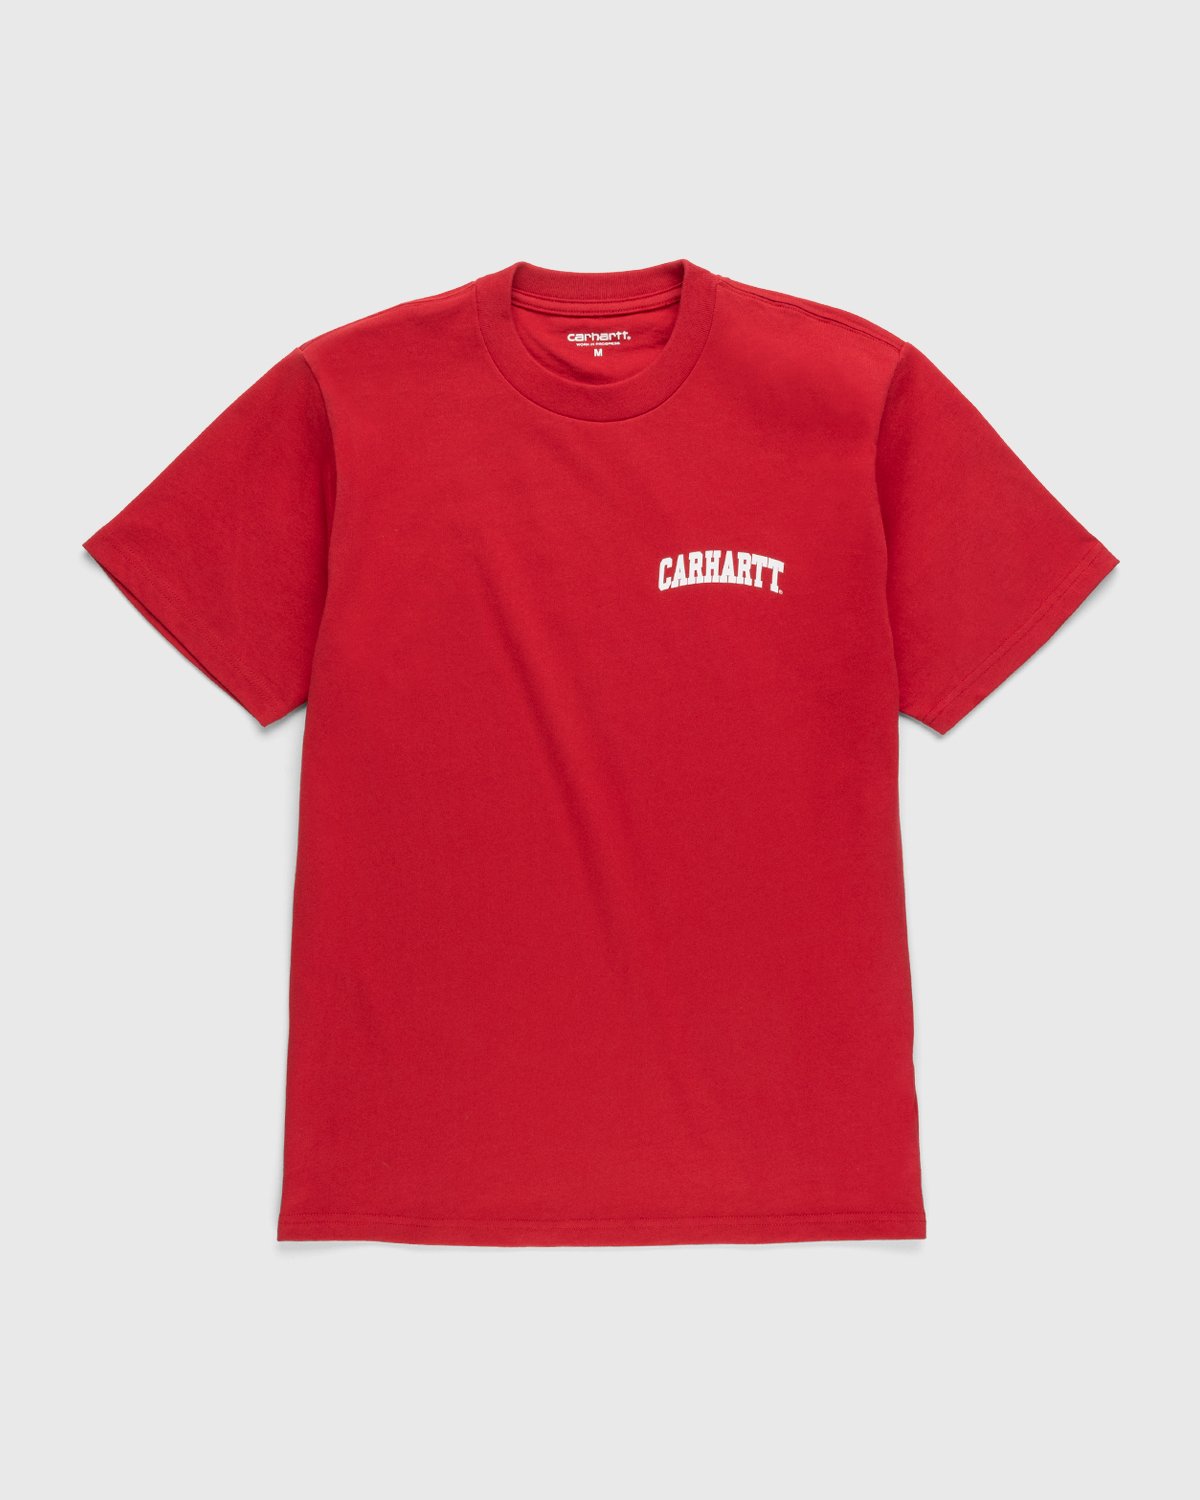 Carhartt WIP - University Script T-Shirt Cornel White - Clothing - Red - Image 1